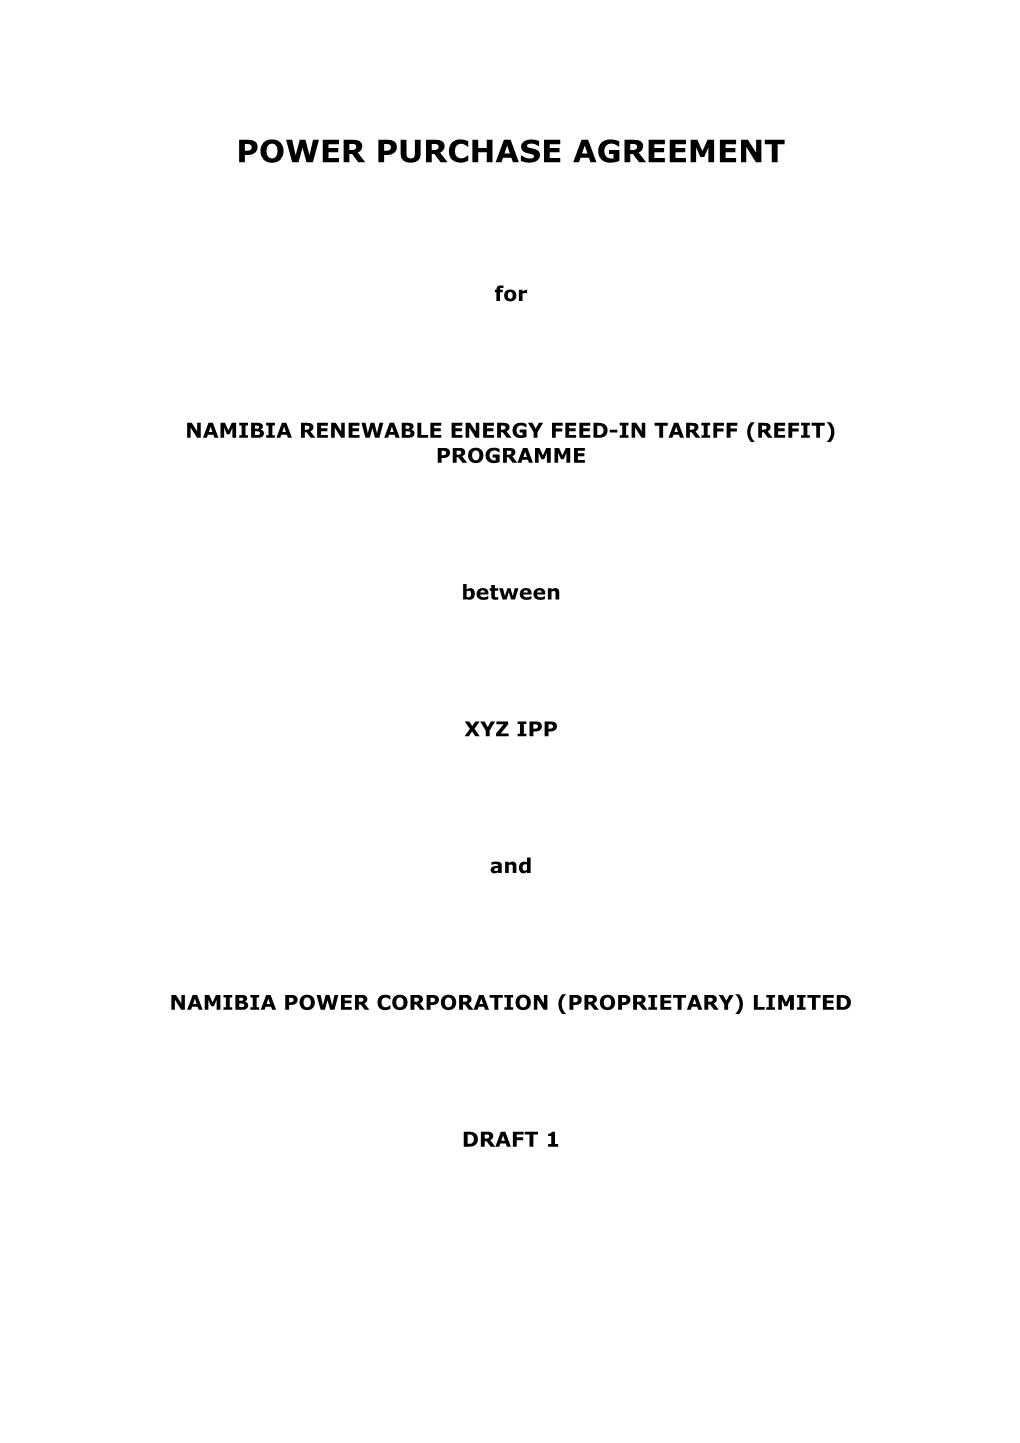 Power Purchase Agreement (Greenam Namibia) (00183894-5)